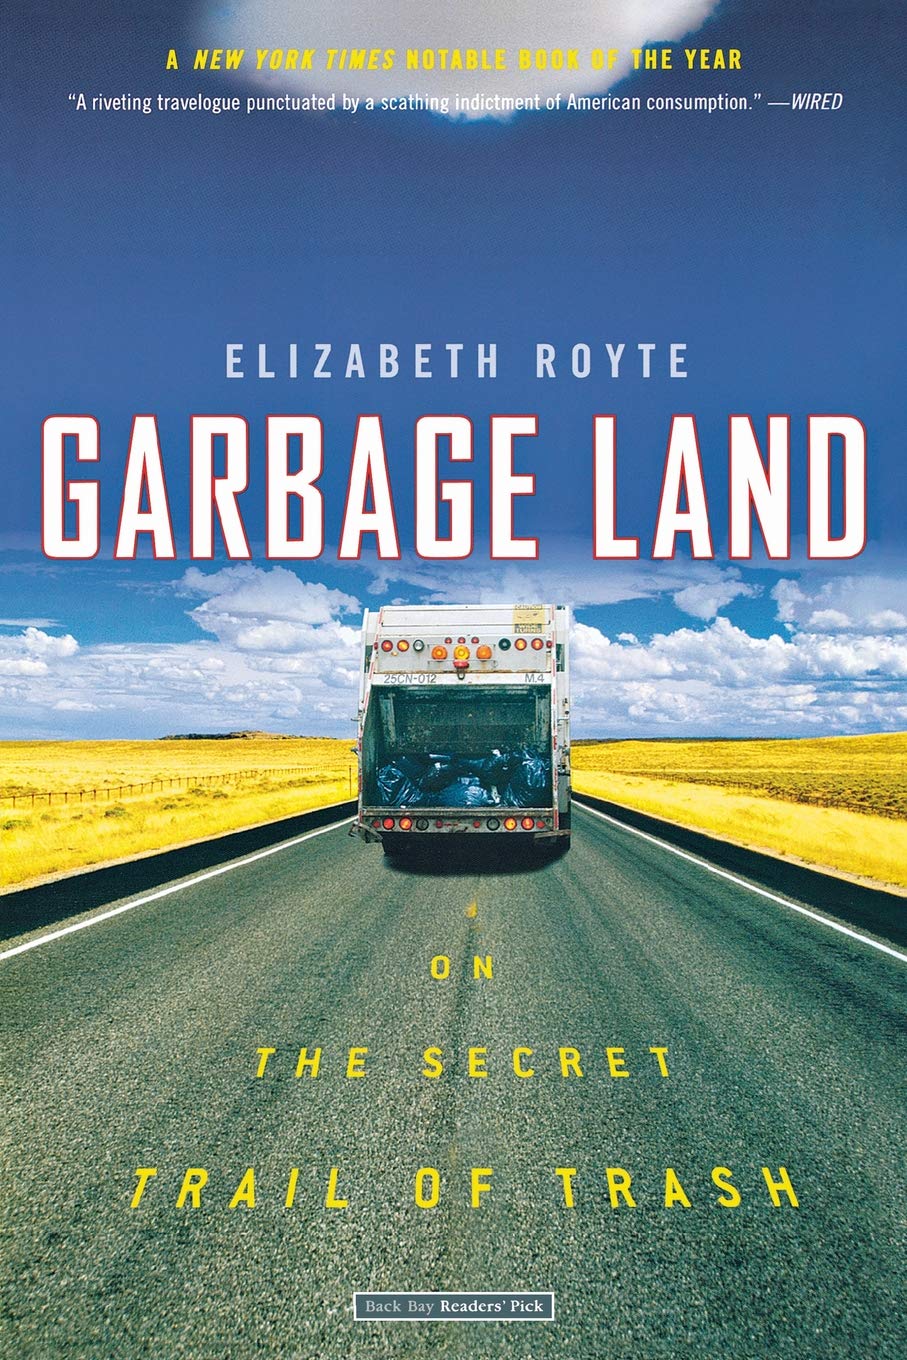 Garbage Land: On the Secret Trail of Trash